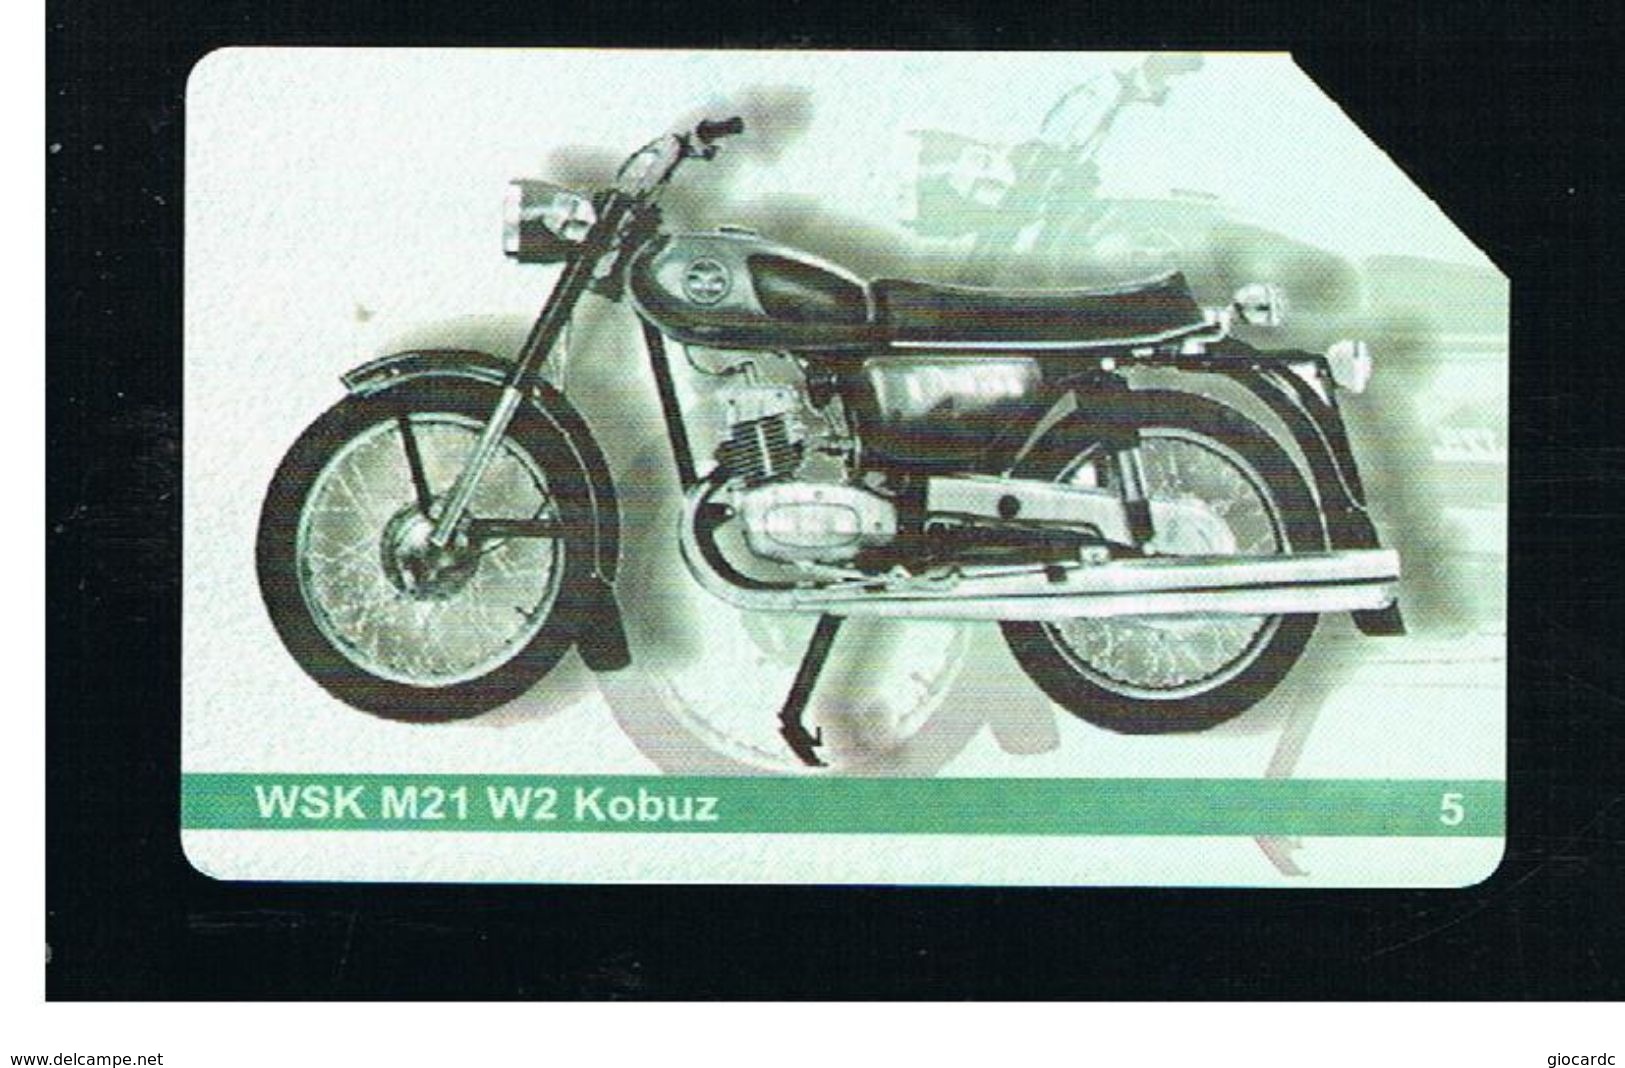 POLONIA (POLAND) - TP  - MOTO: WSK M21 W2 KOBUZ - USED - RIF. 10242 - Motorbikes